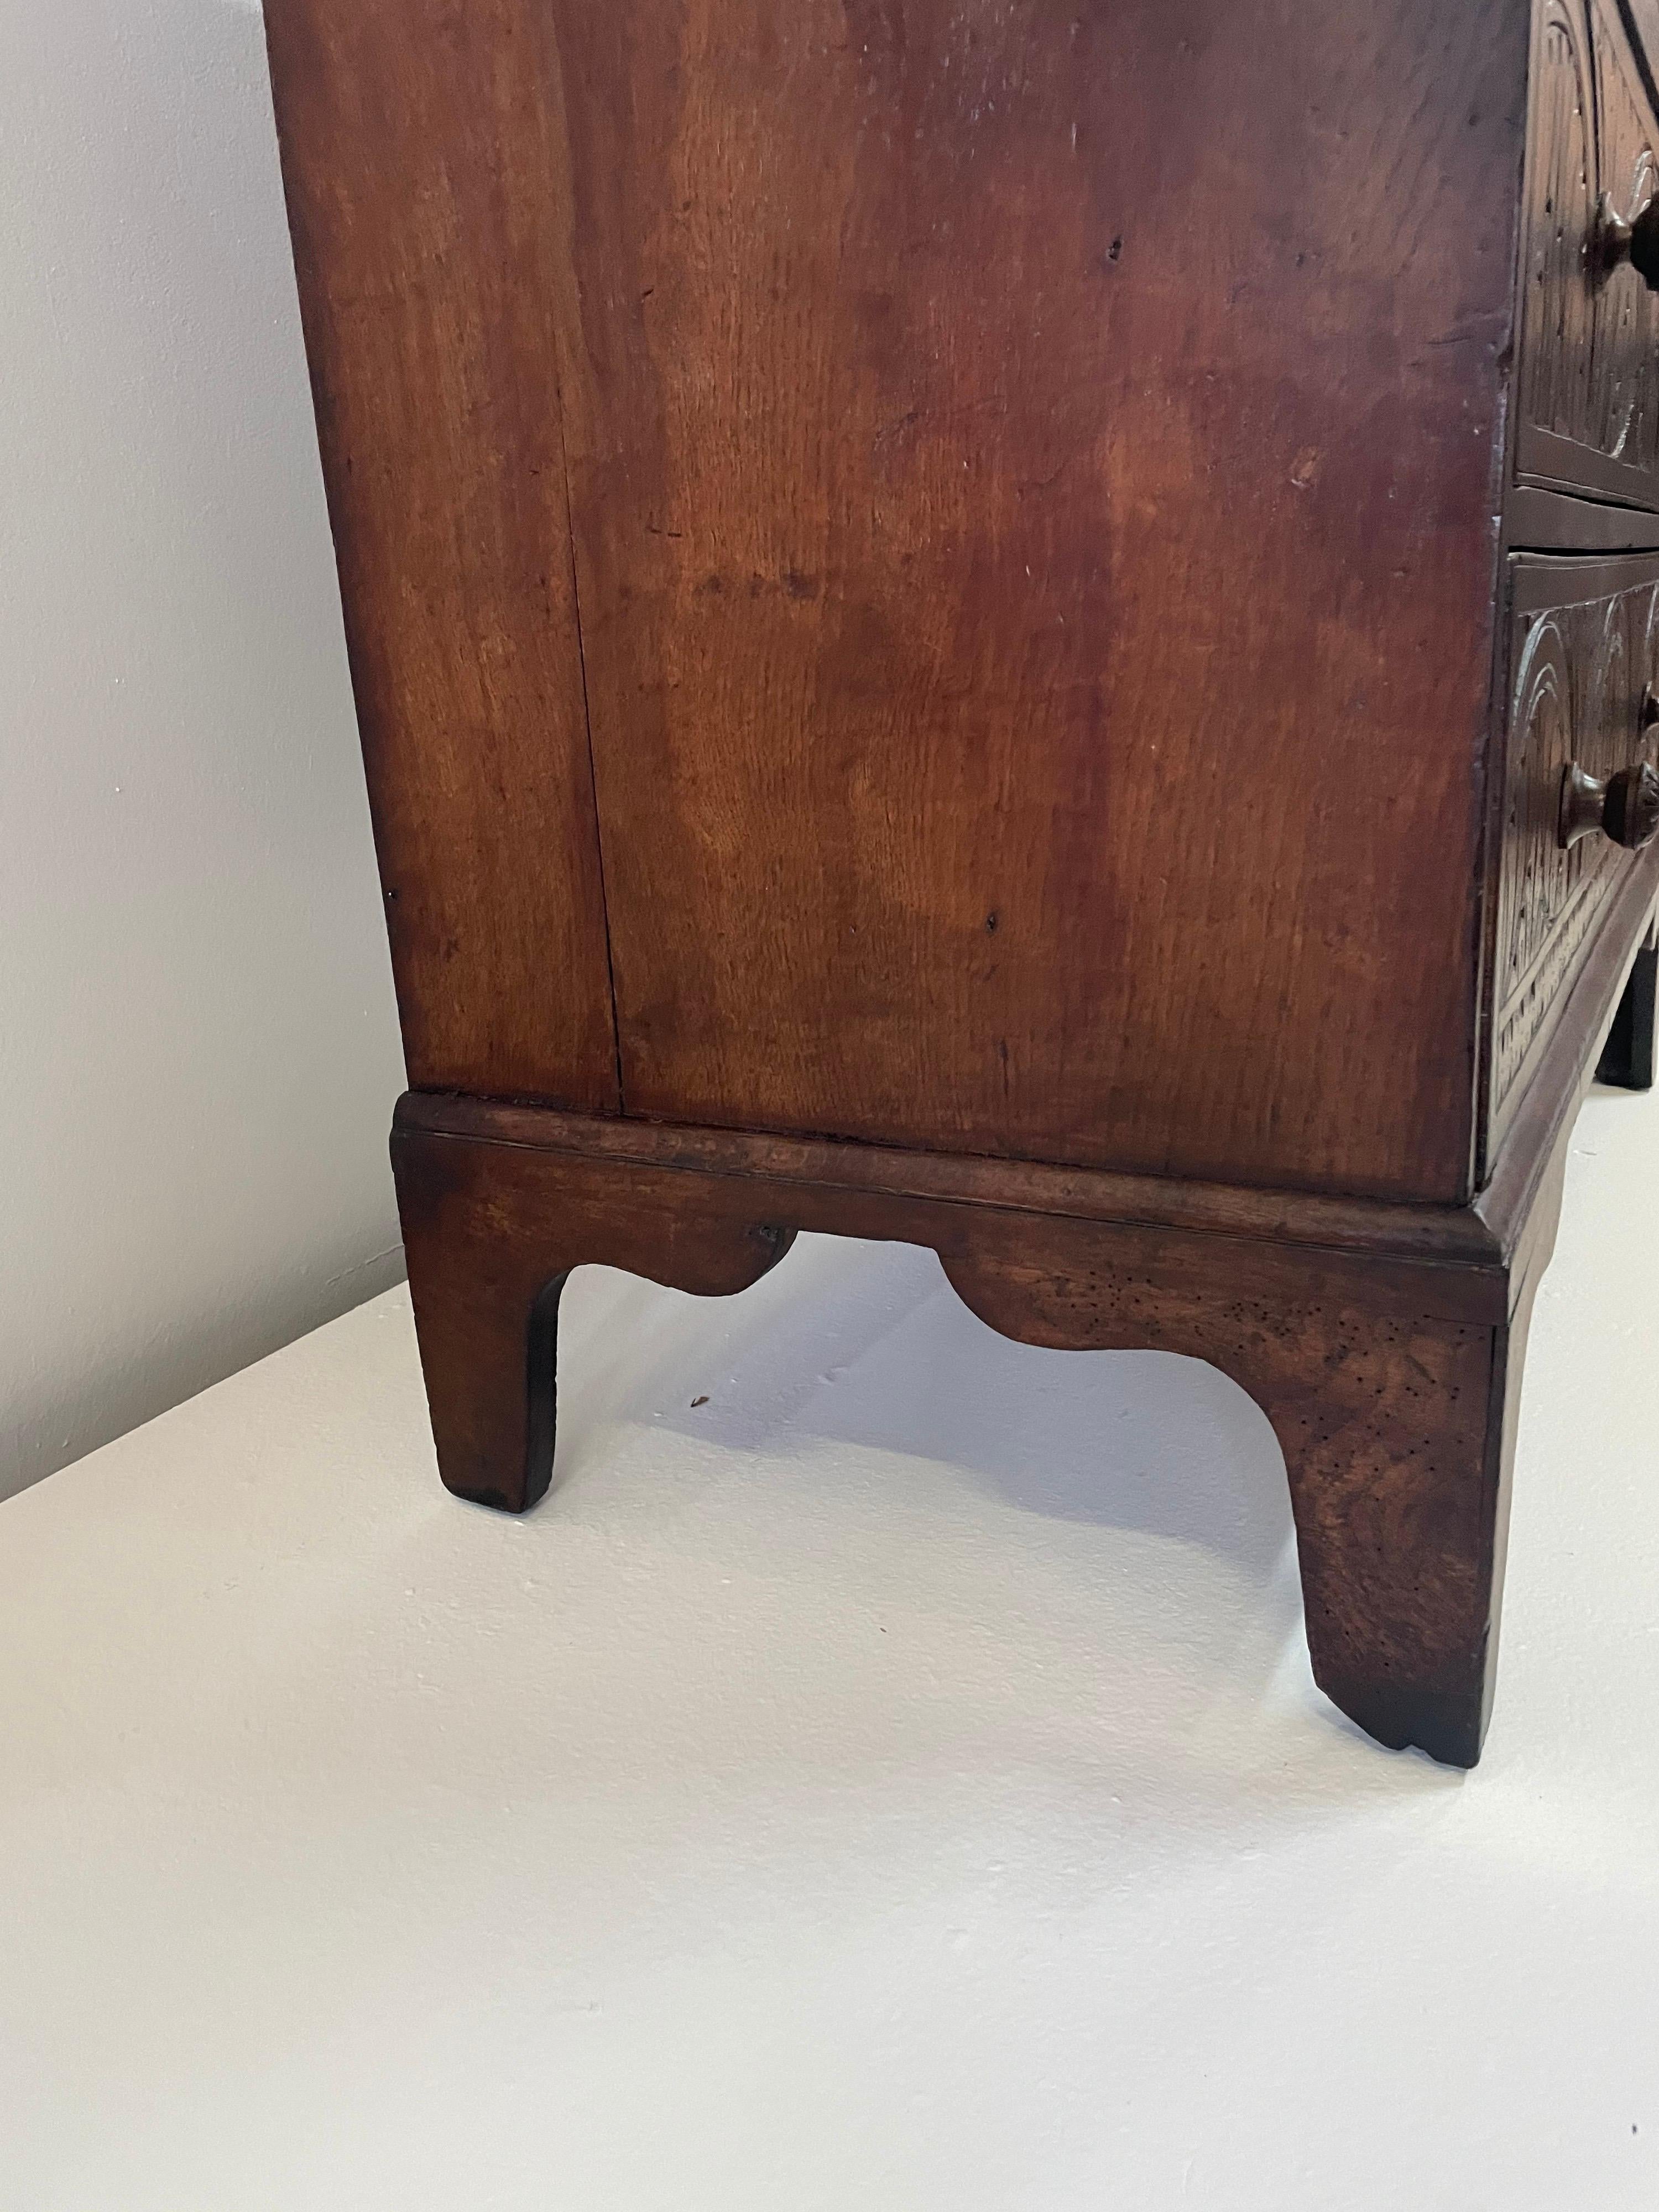 british carved chair and secretary desk refunish